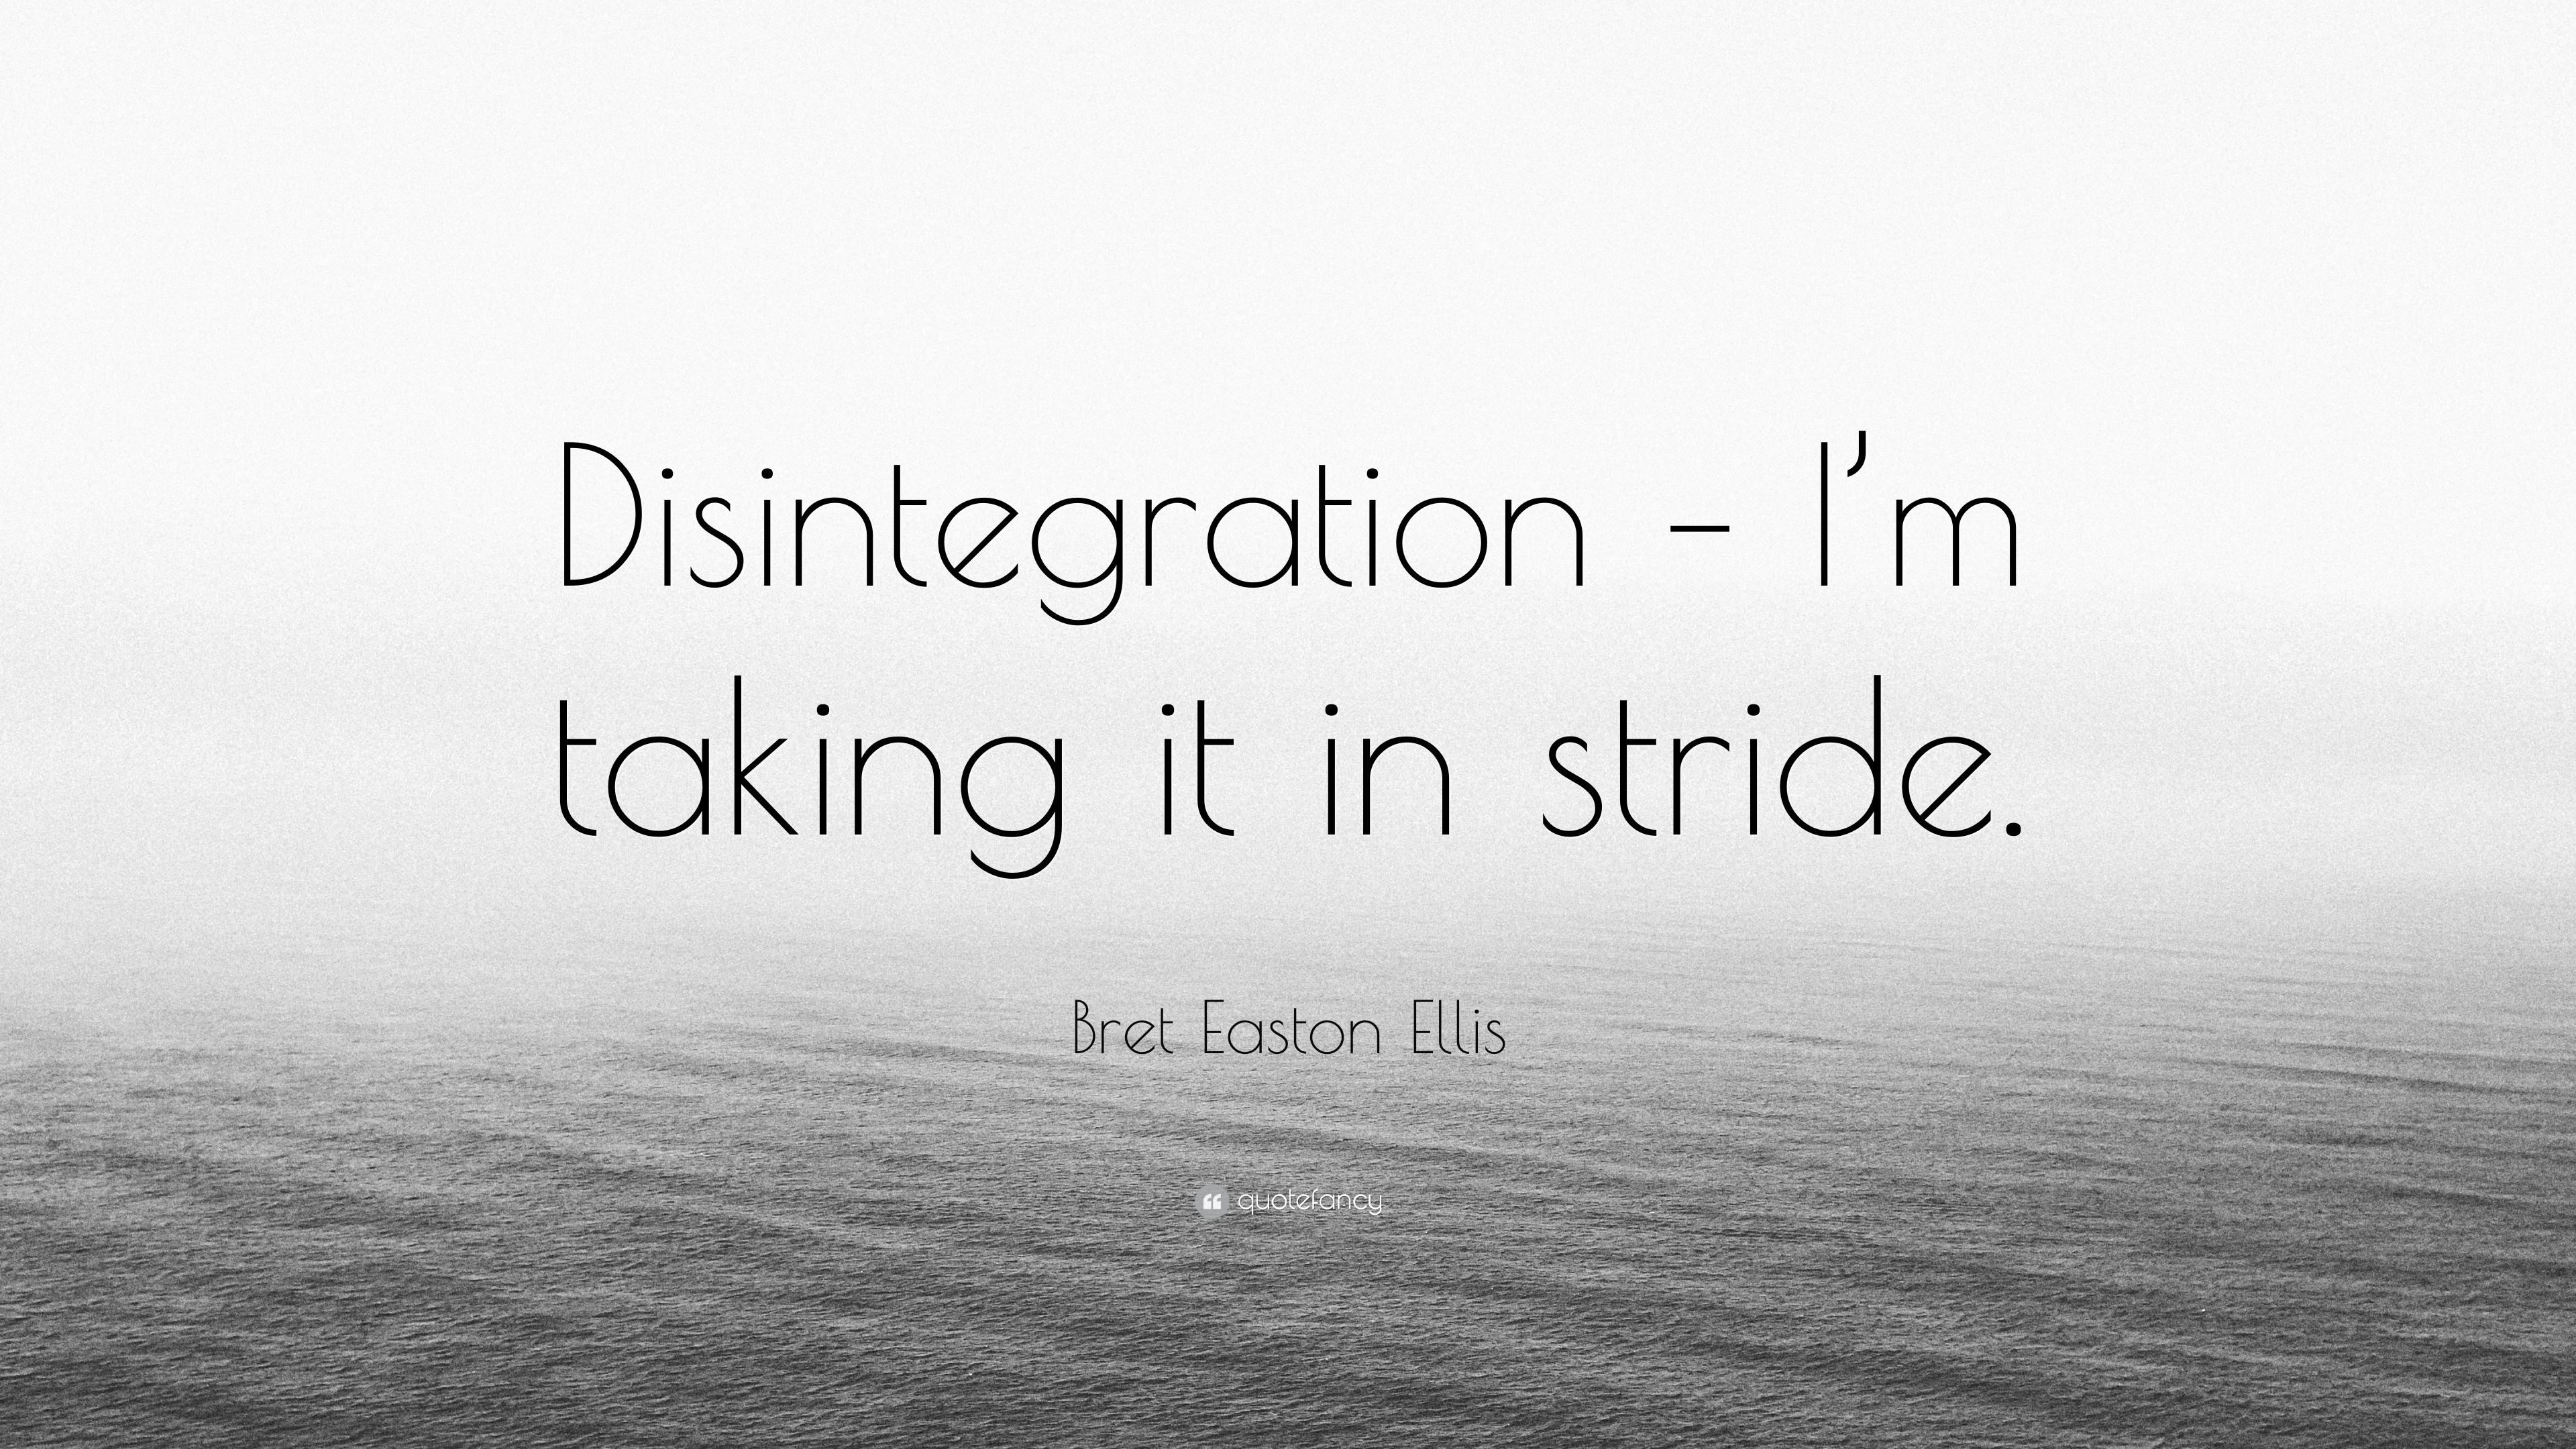 Bret Easton Ellis Quote: “Disintegration